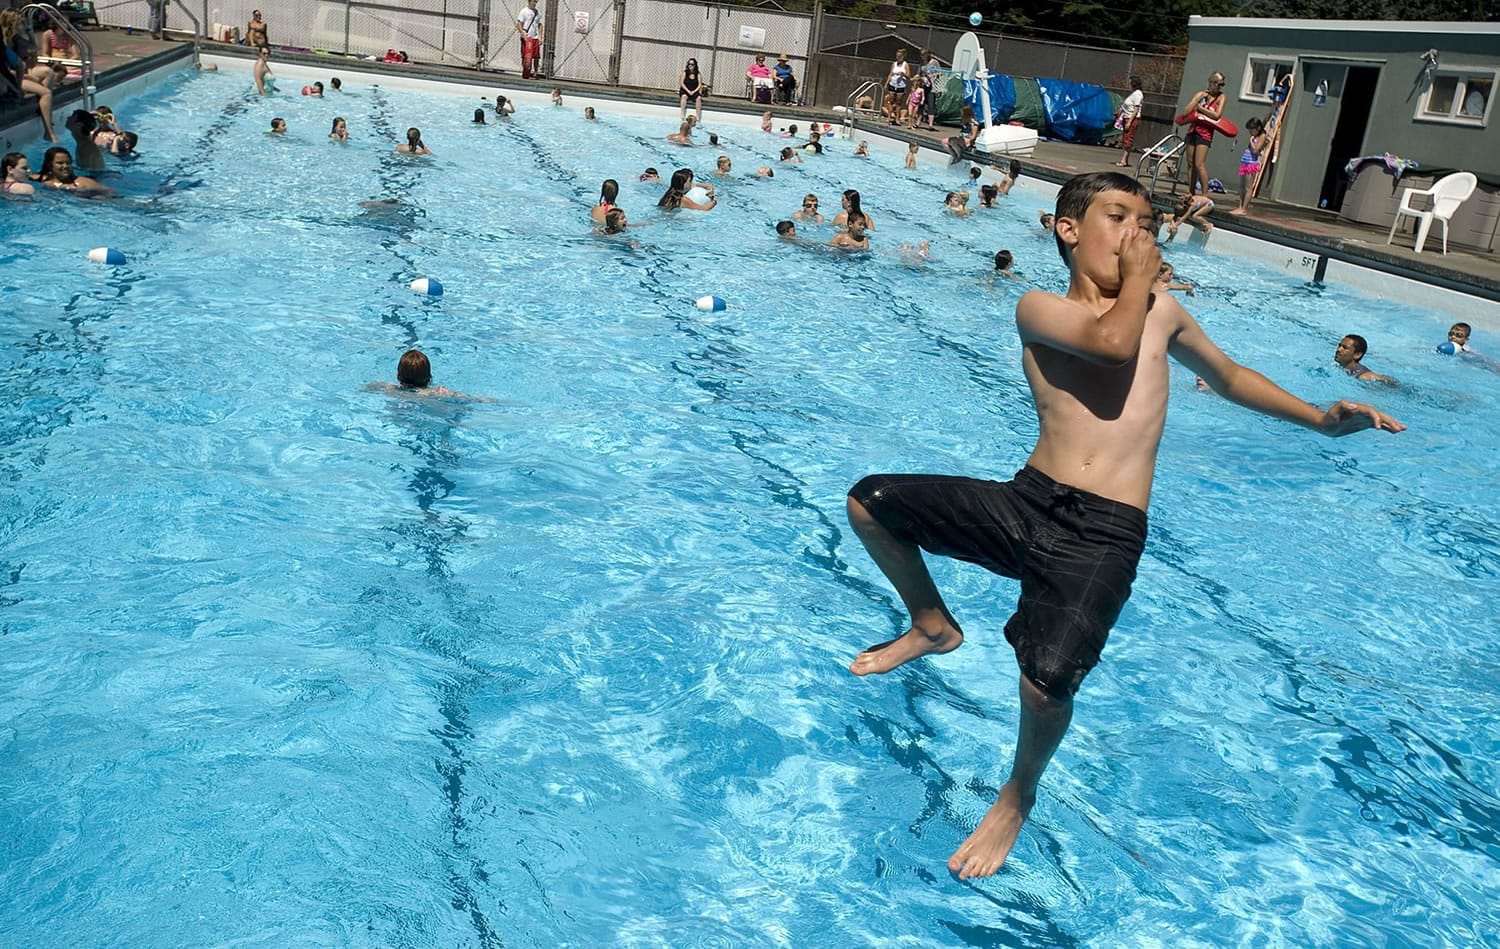 Teo Echeverio, 10, of Camas prepares to splash into the Camas Swimming Pool on Wednesday afternoon.